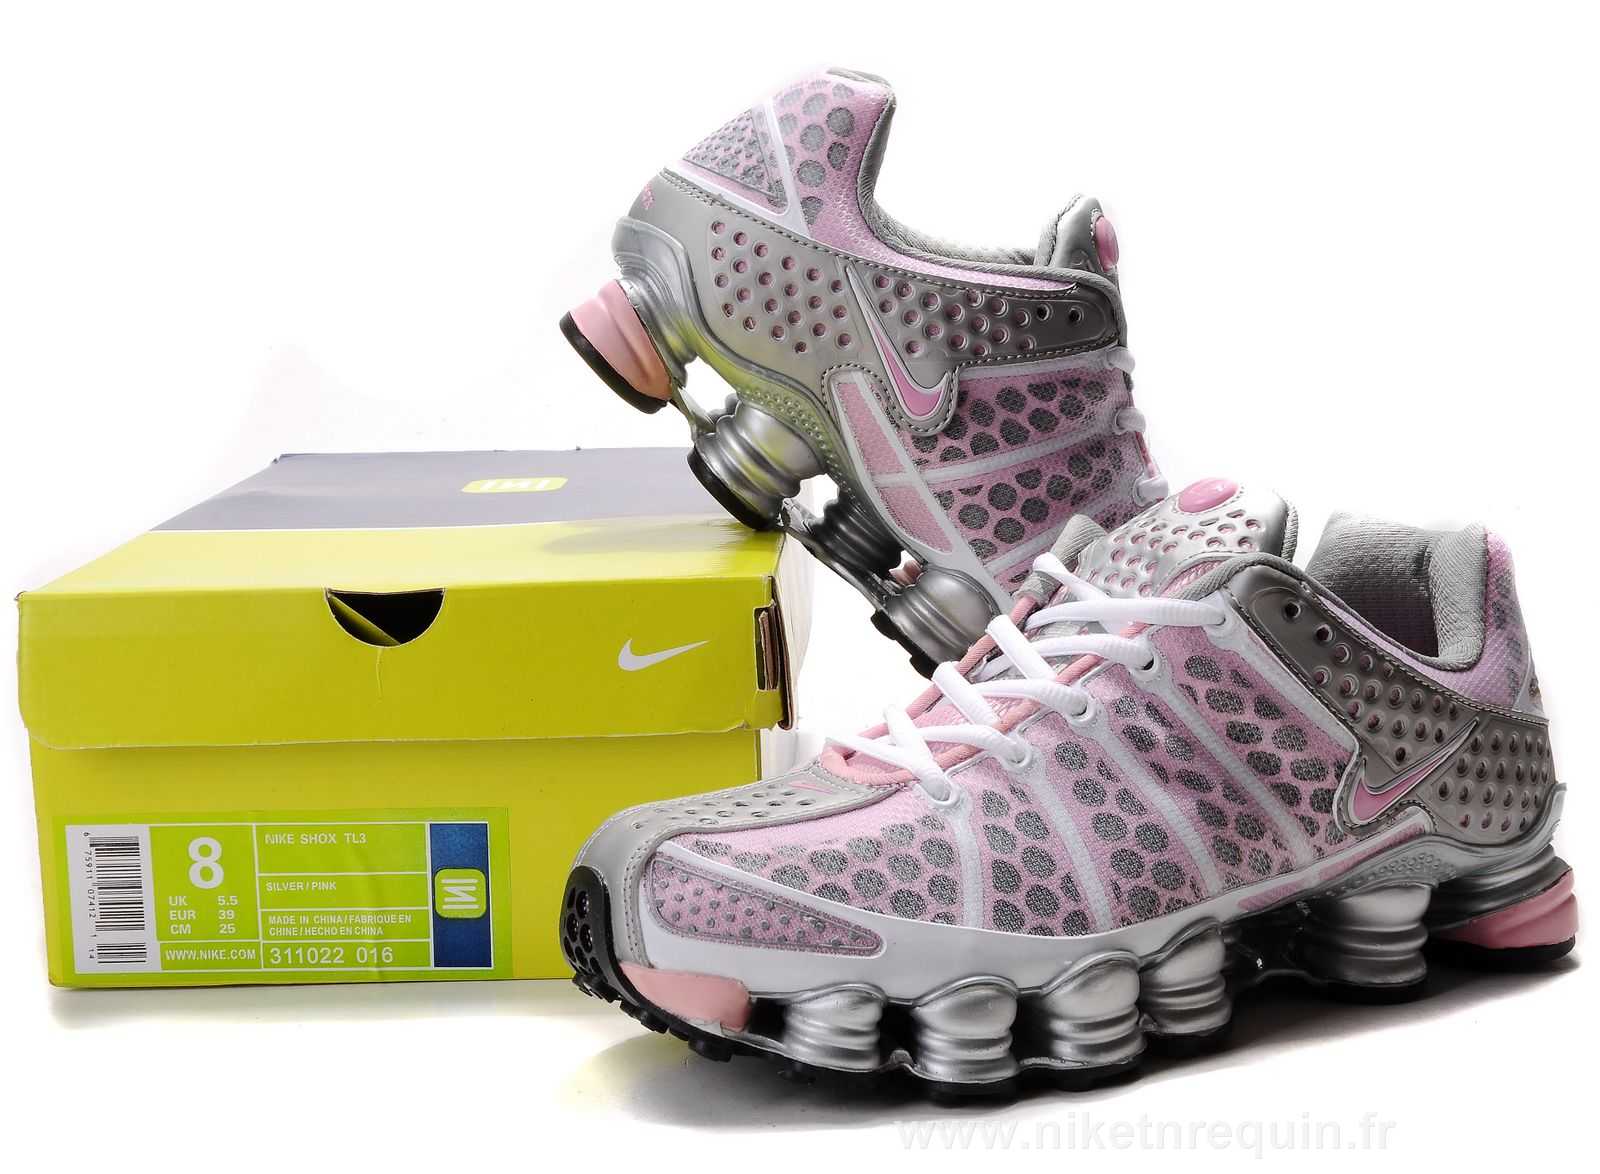 femmes mauve et argente Nike Shox TL3 (2).JPG